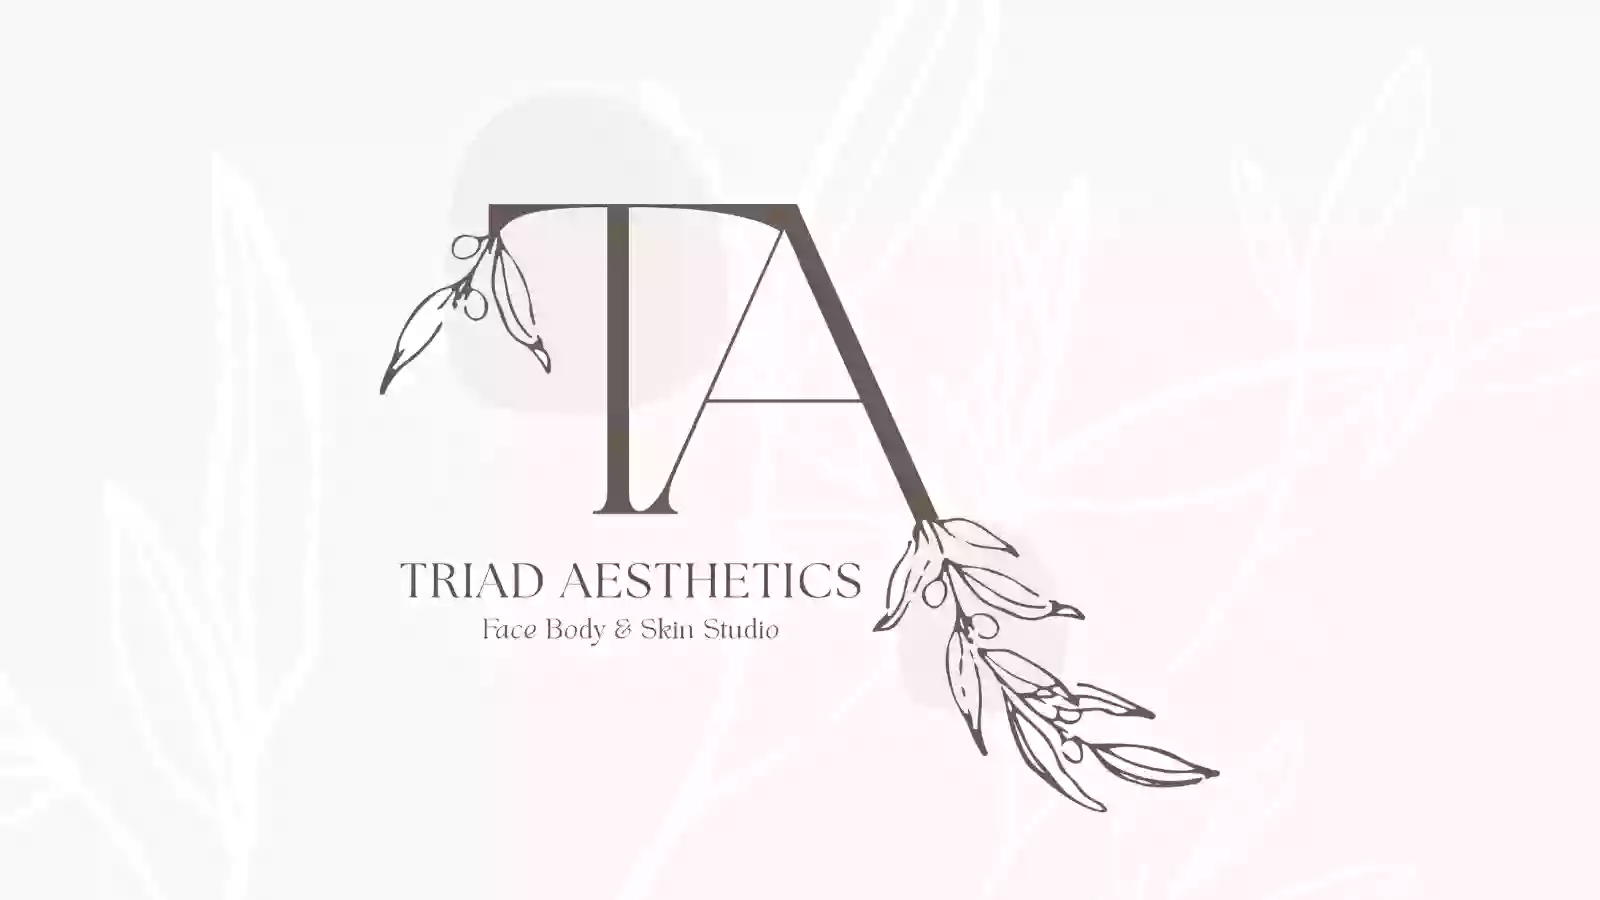 Triad Aesthetics Face Body & Skin Studio